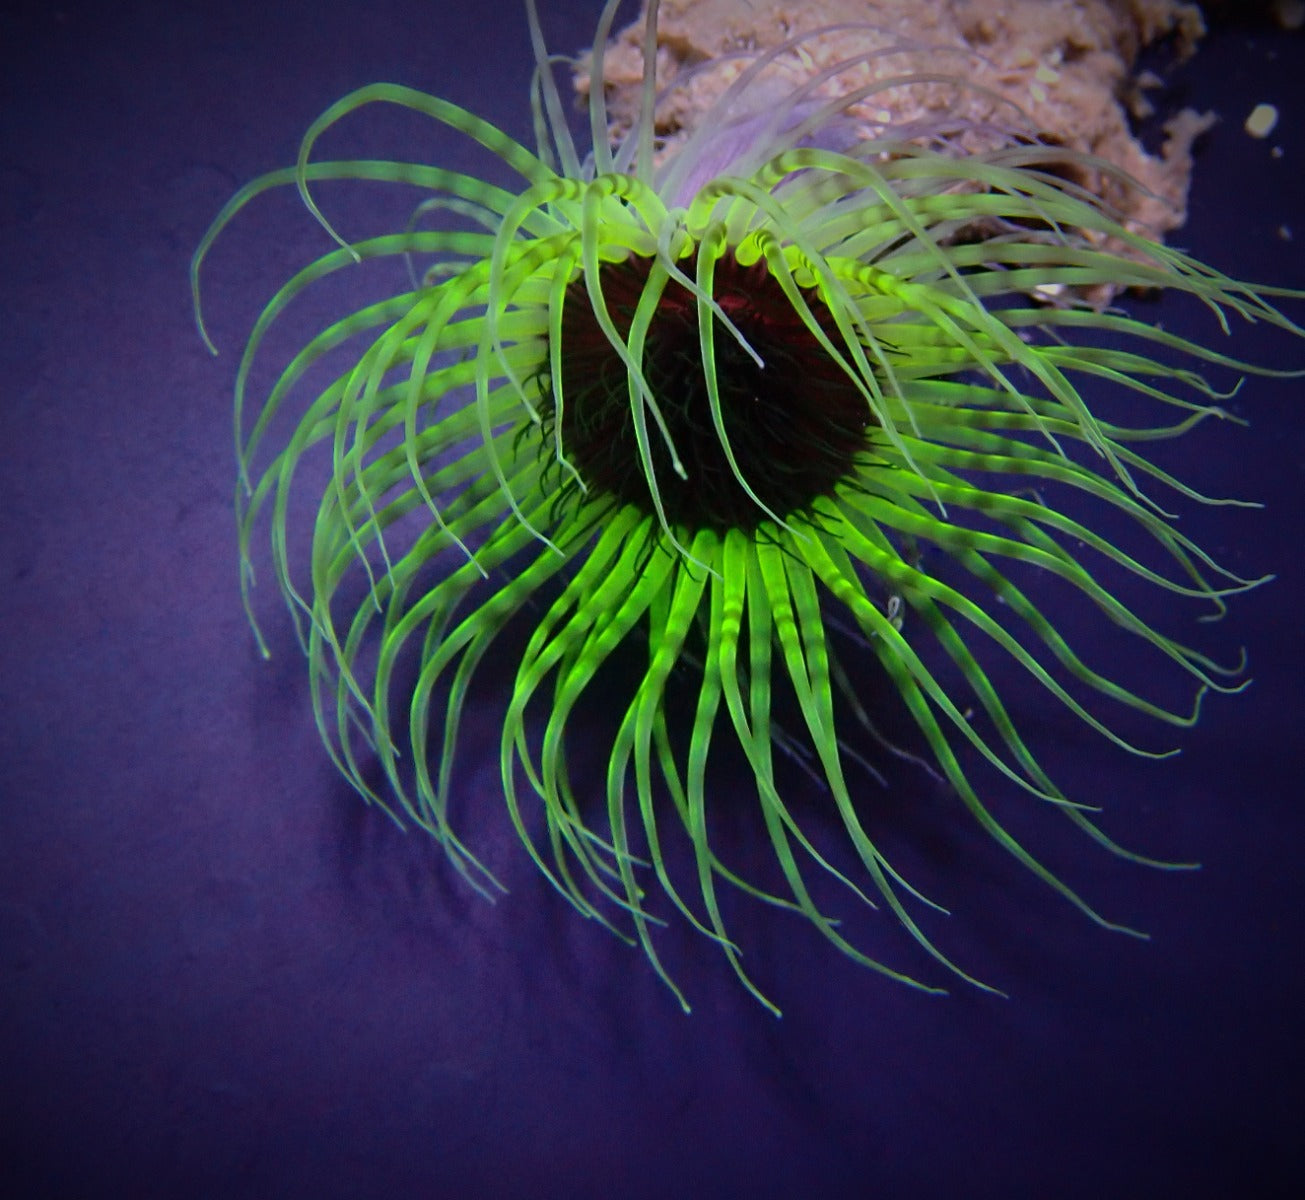 Pachycerianthus spp. (Groen) - Cylinder anemone (Groen)